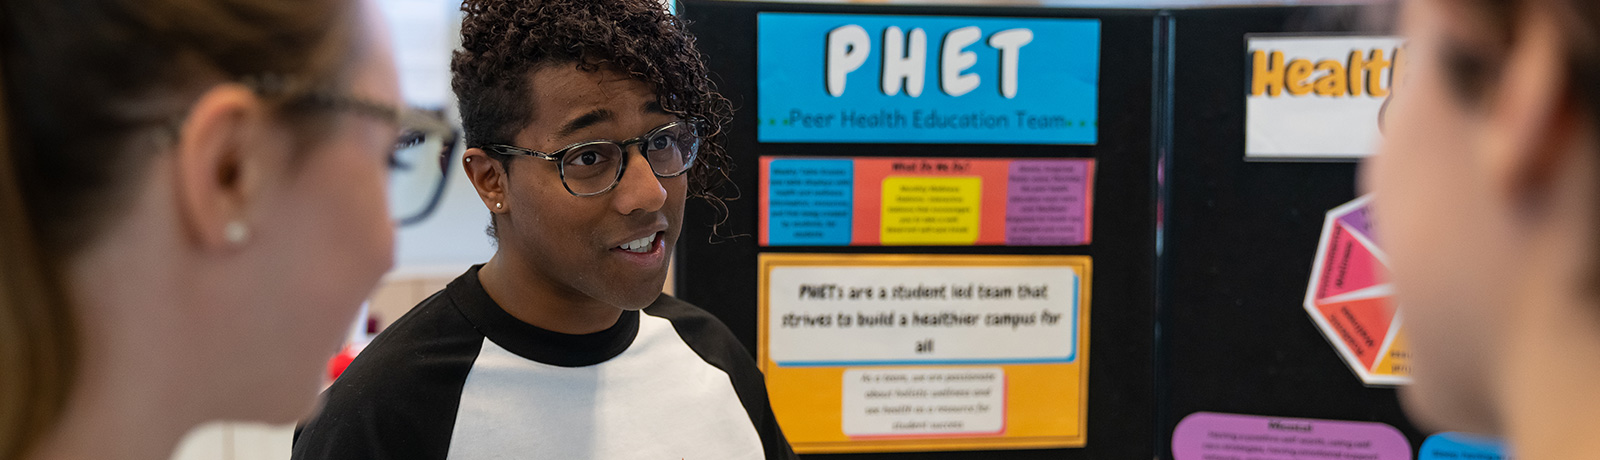 student standing in front of PHET presentation